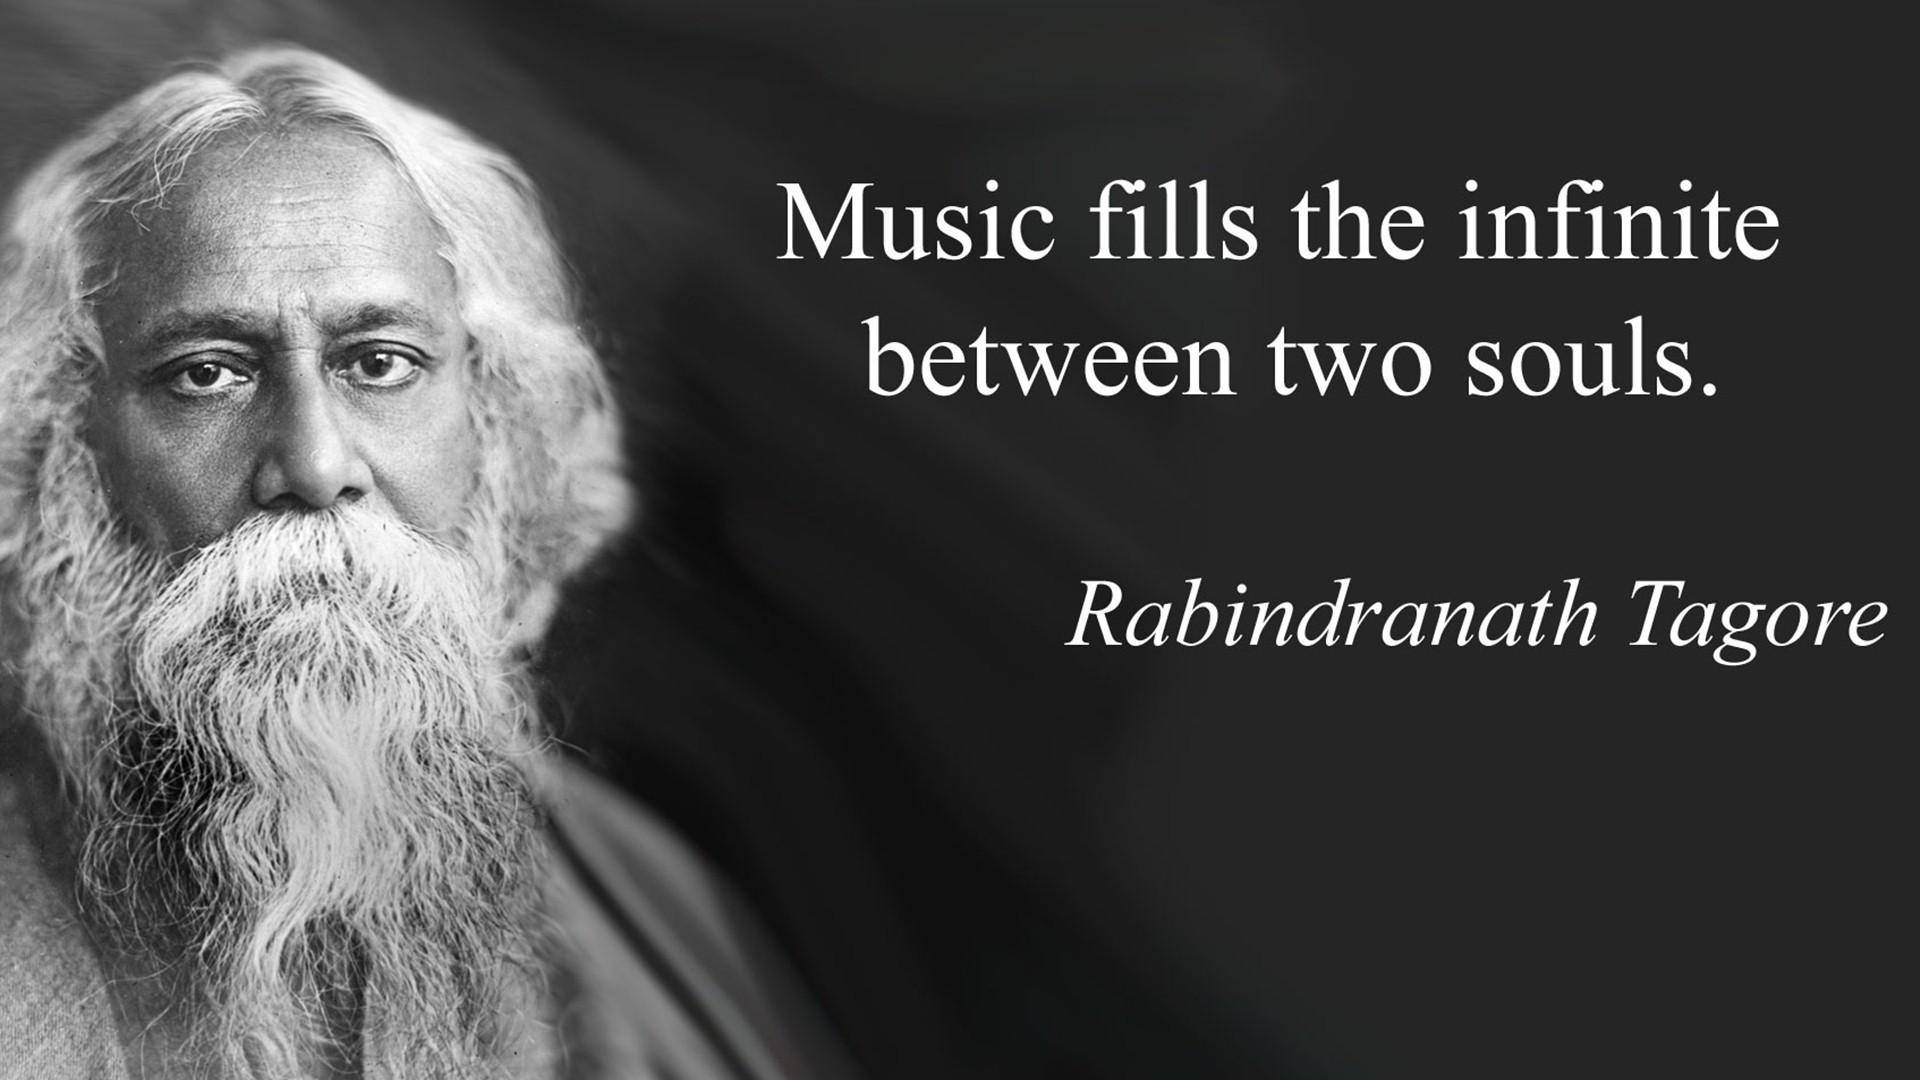 Download Rabindranath Tagore Music Quote Wallpaper 